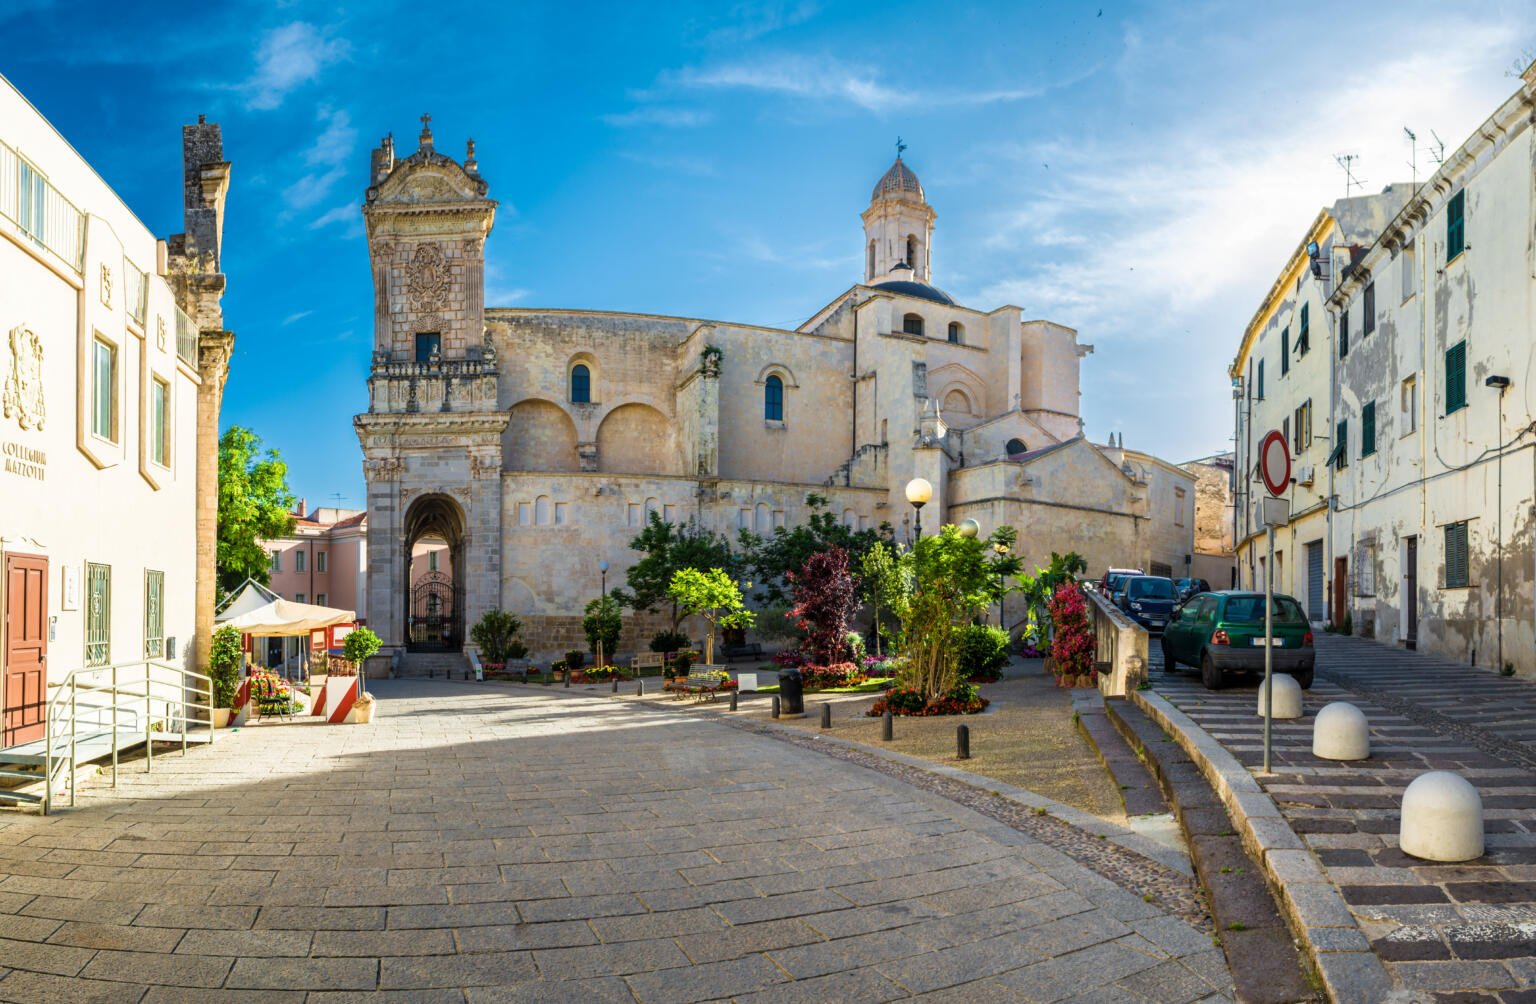 Old town buildings and cobbled stones in Sassaari, Sardinia